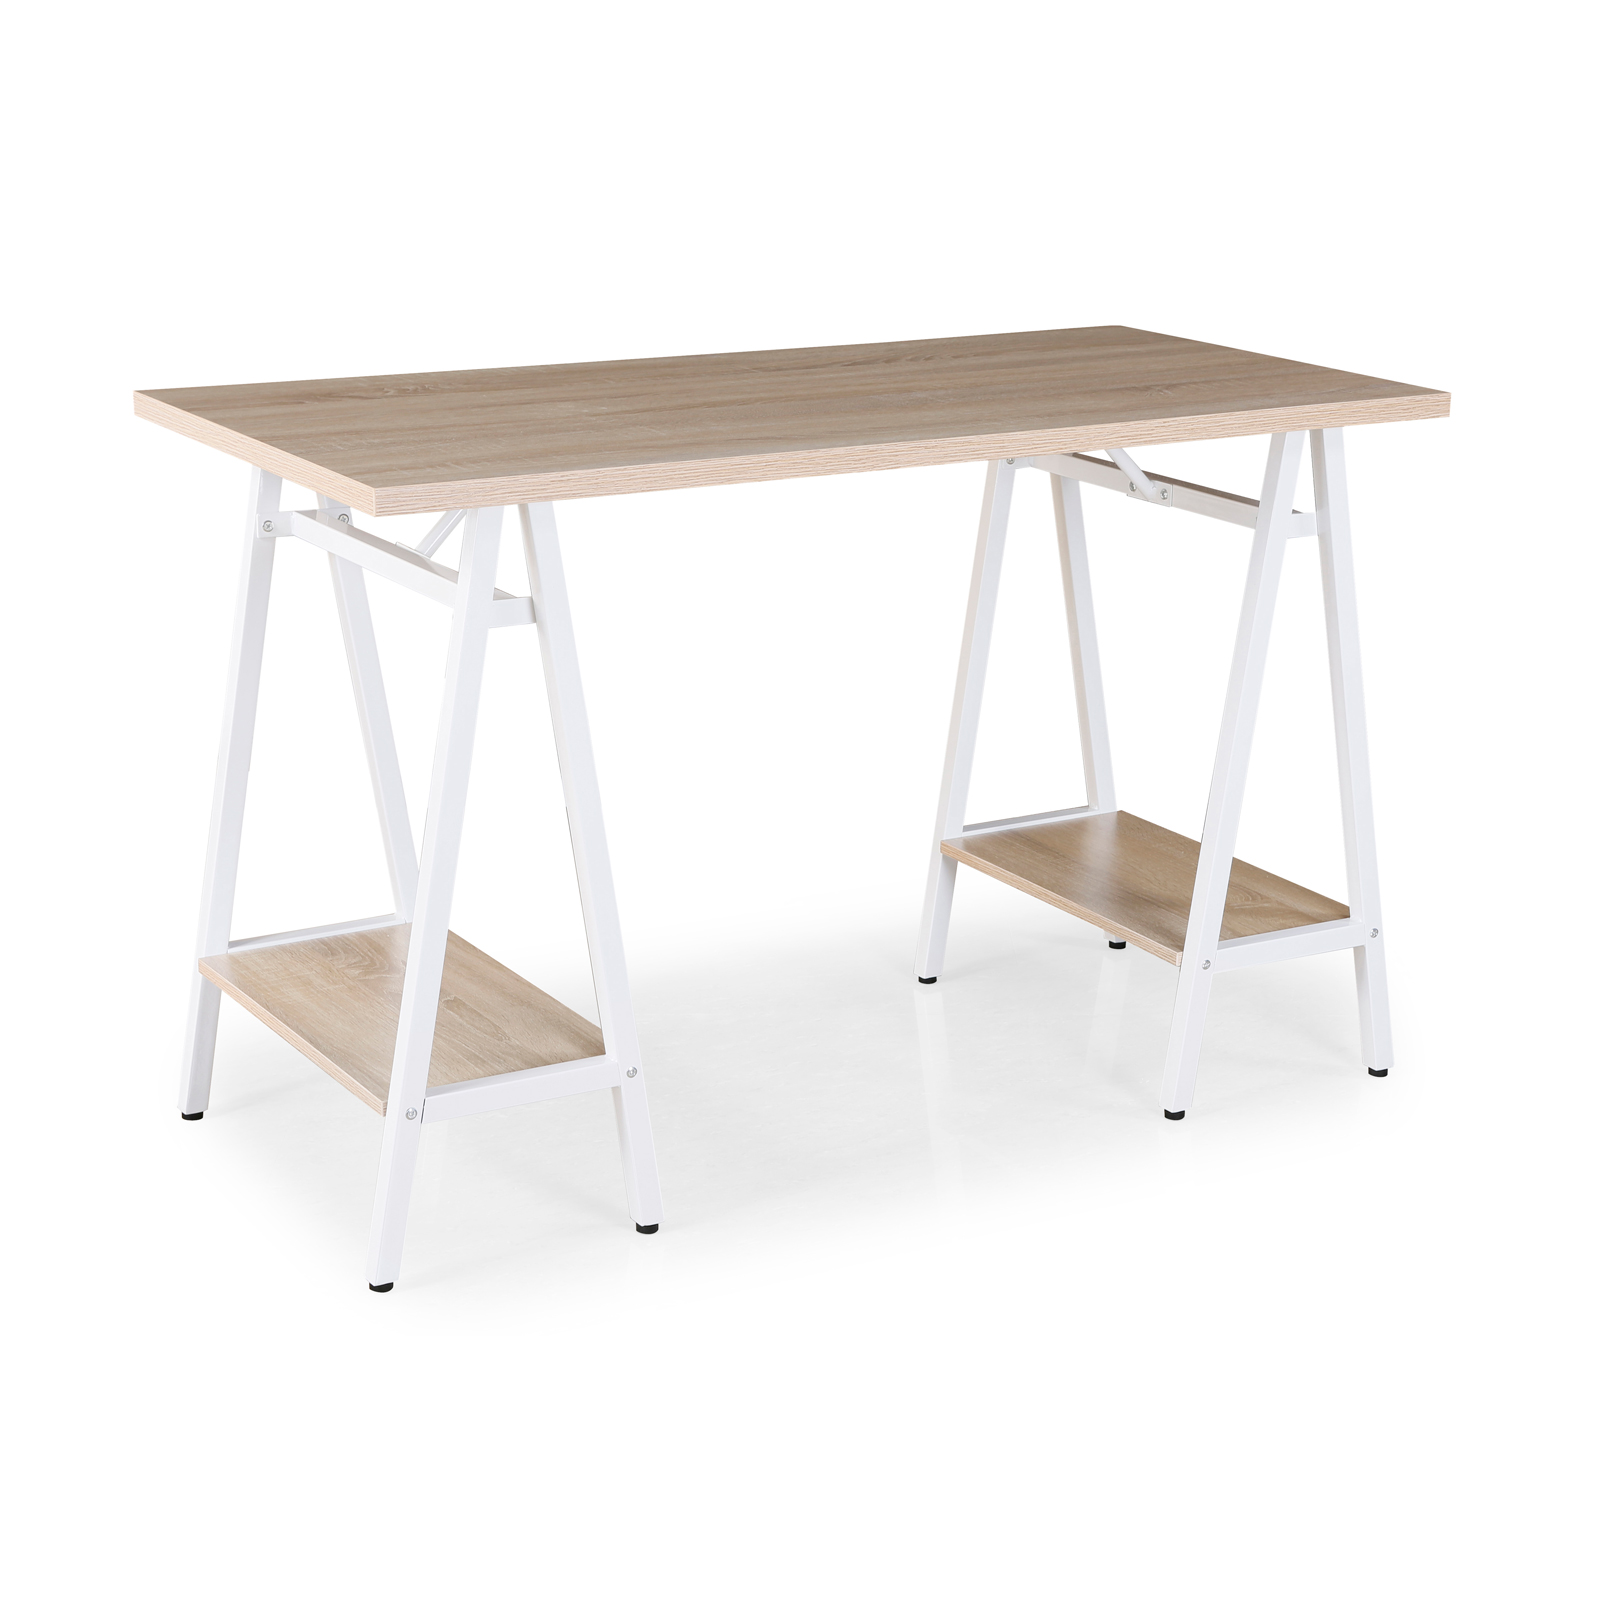 Rectangular Desks Pella home office workstation with trestle legs – Windsor oak with white frame